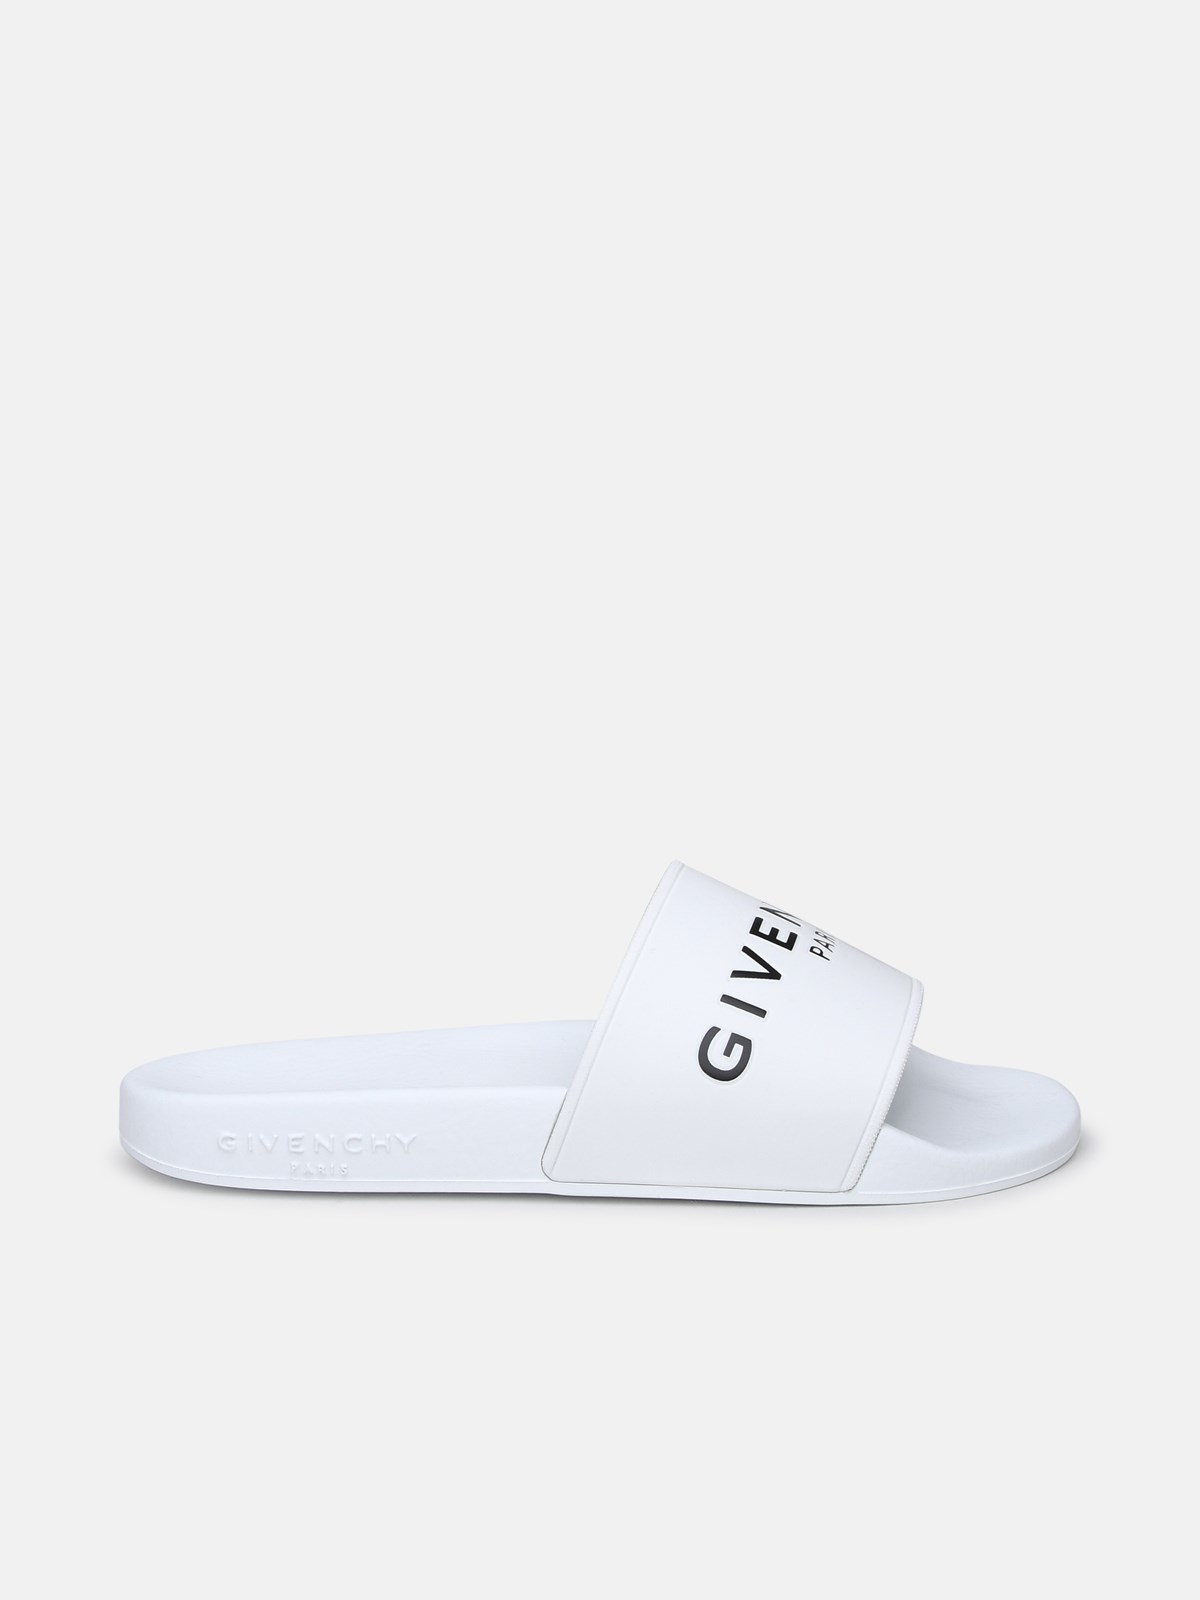 Givenchy White Rubber Slipper